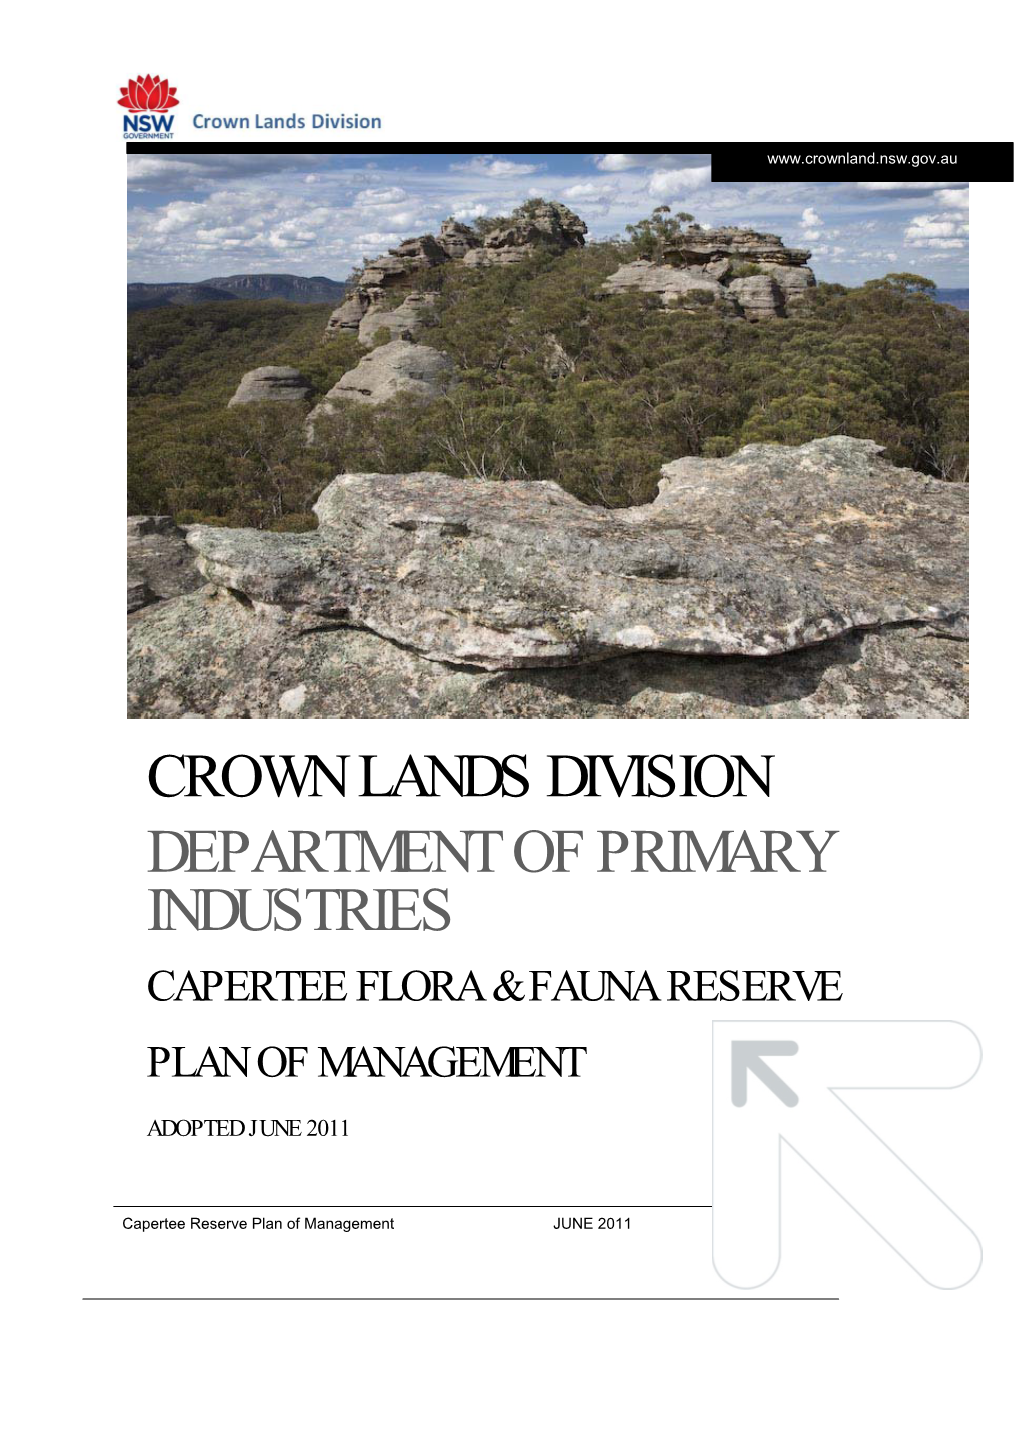 Capertee Flora & Fauna Reserve Plan of Management